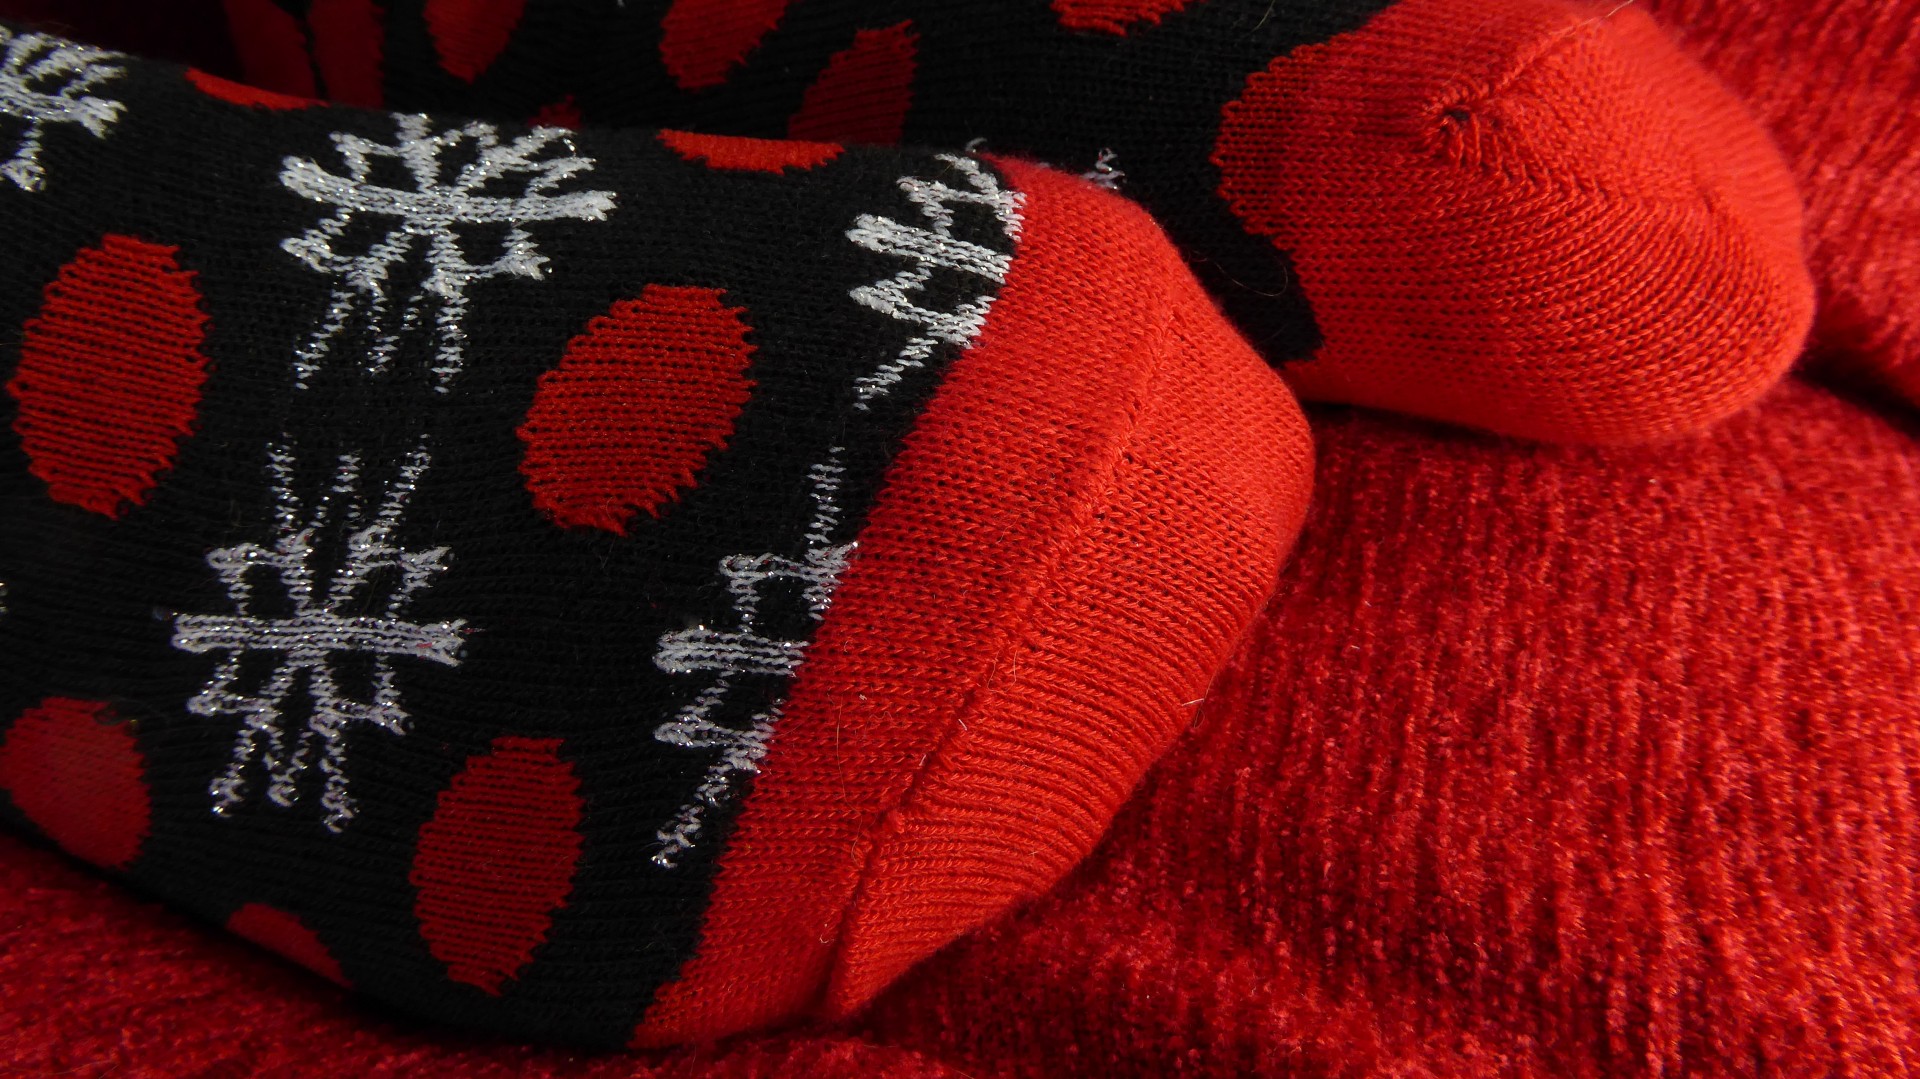 Christmas Socks On A Red Pillow